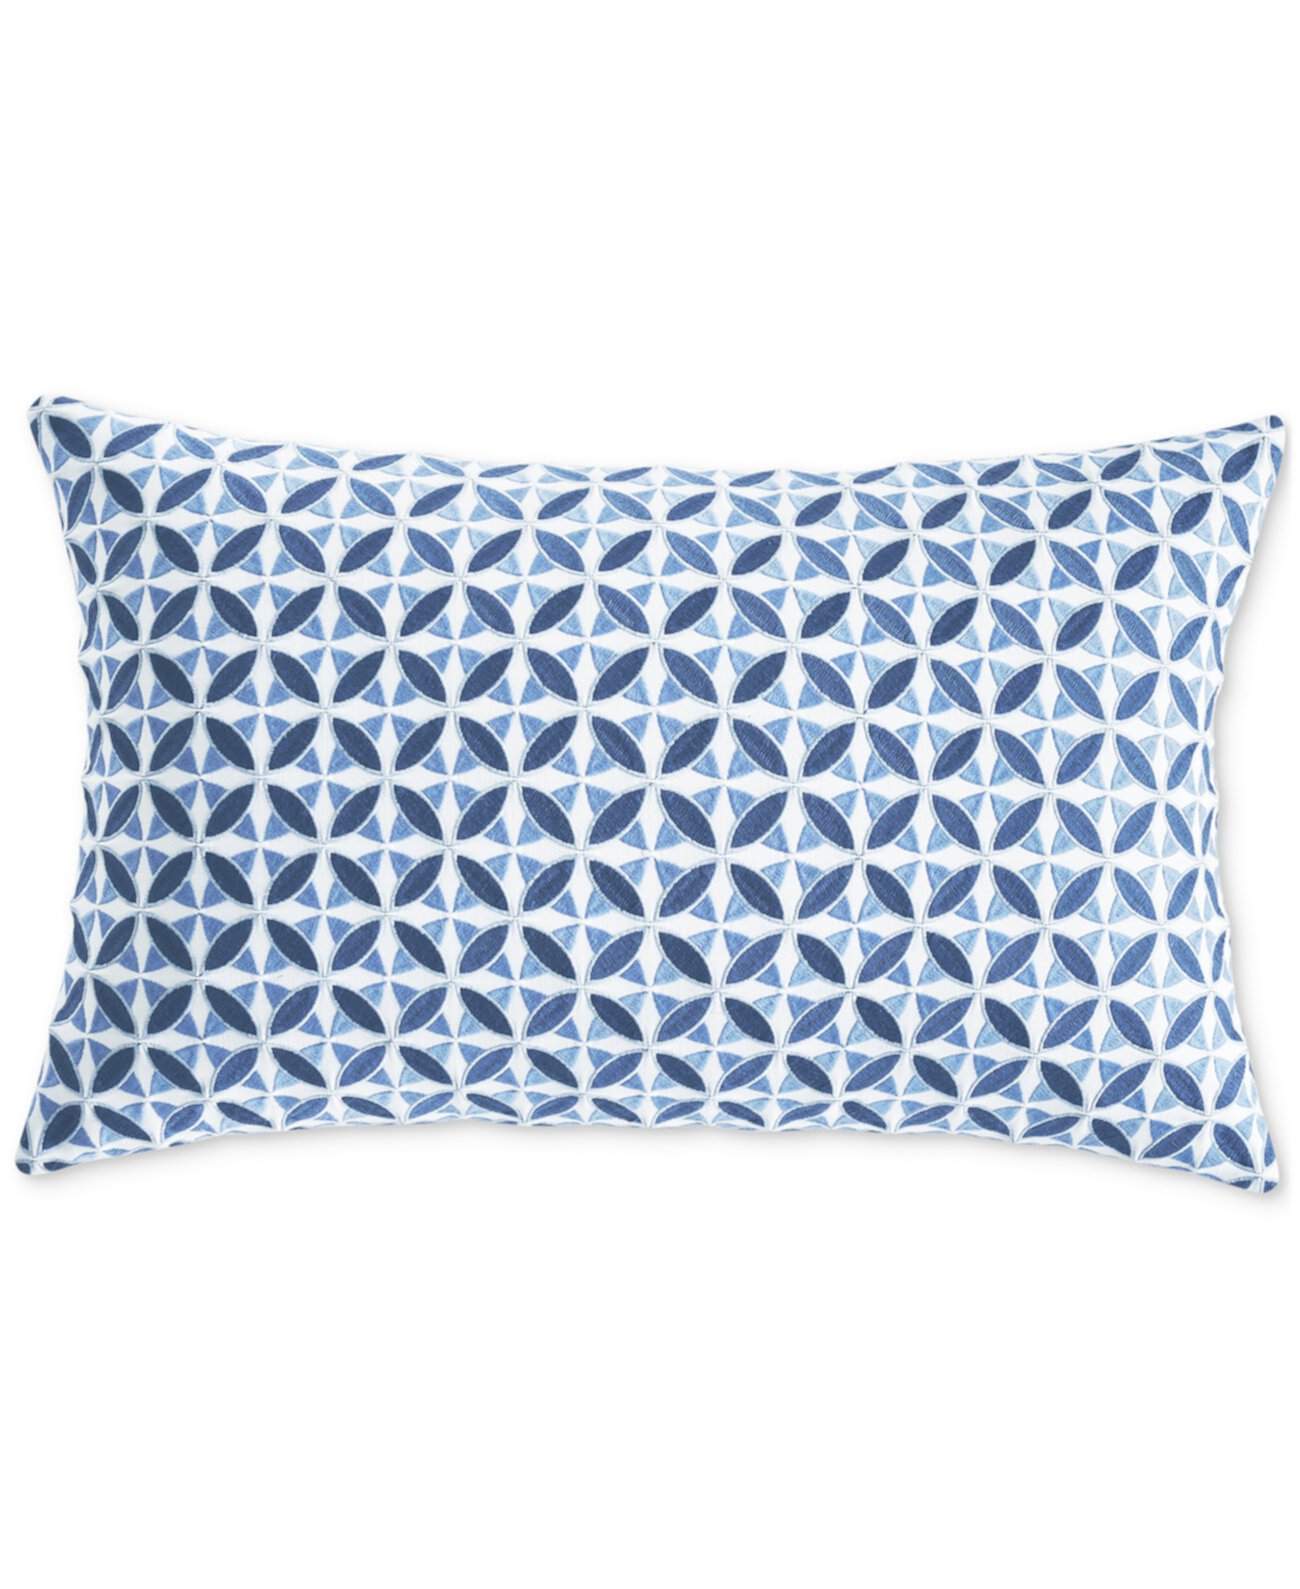 Foulard Geo Decorative Pillow, 14" x 20", Created for Macy's Charter Club